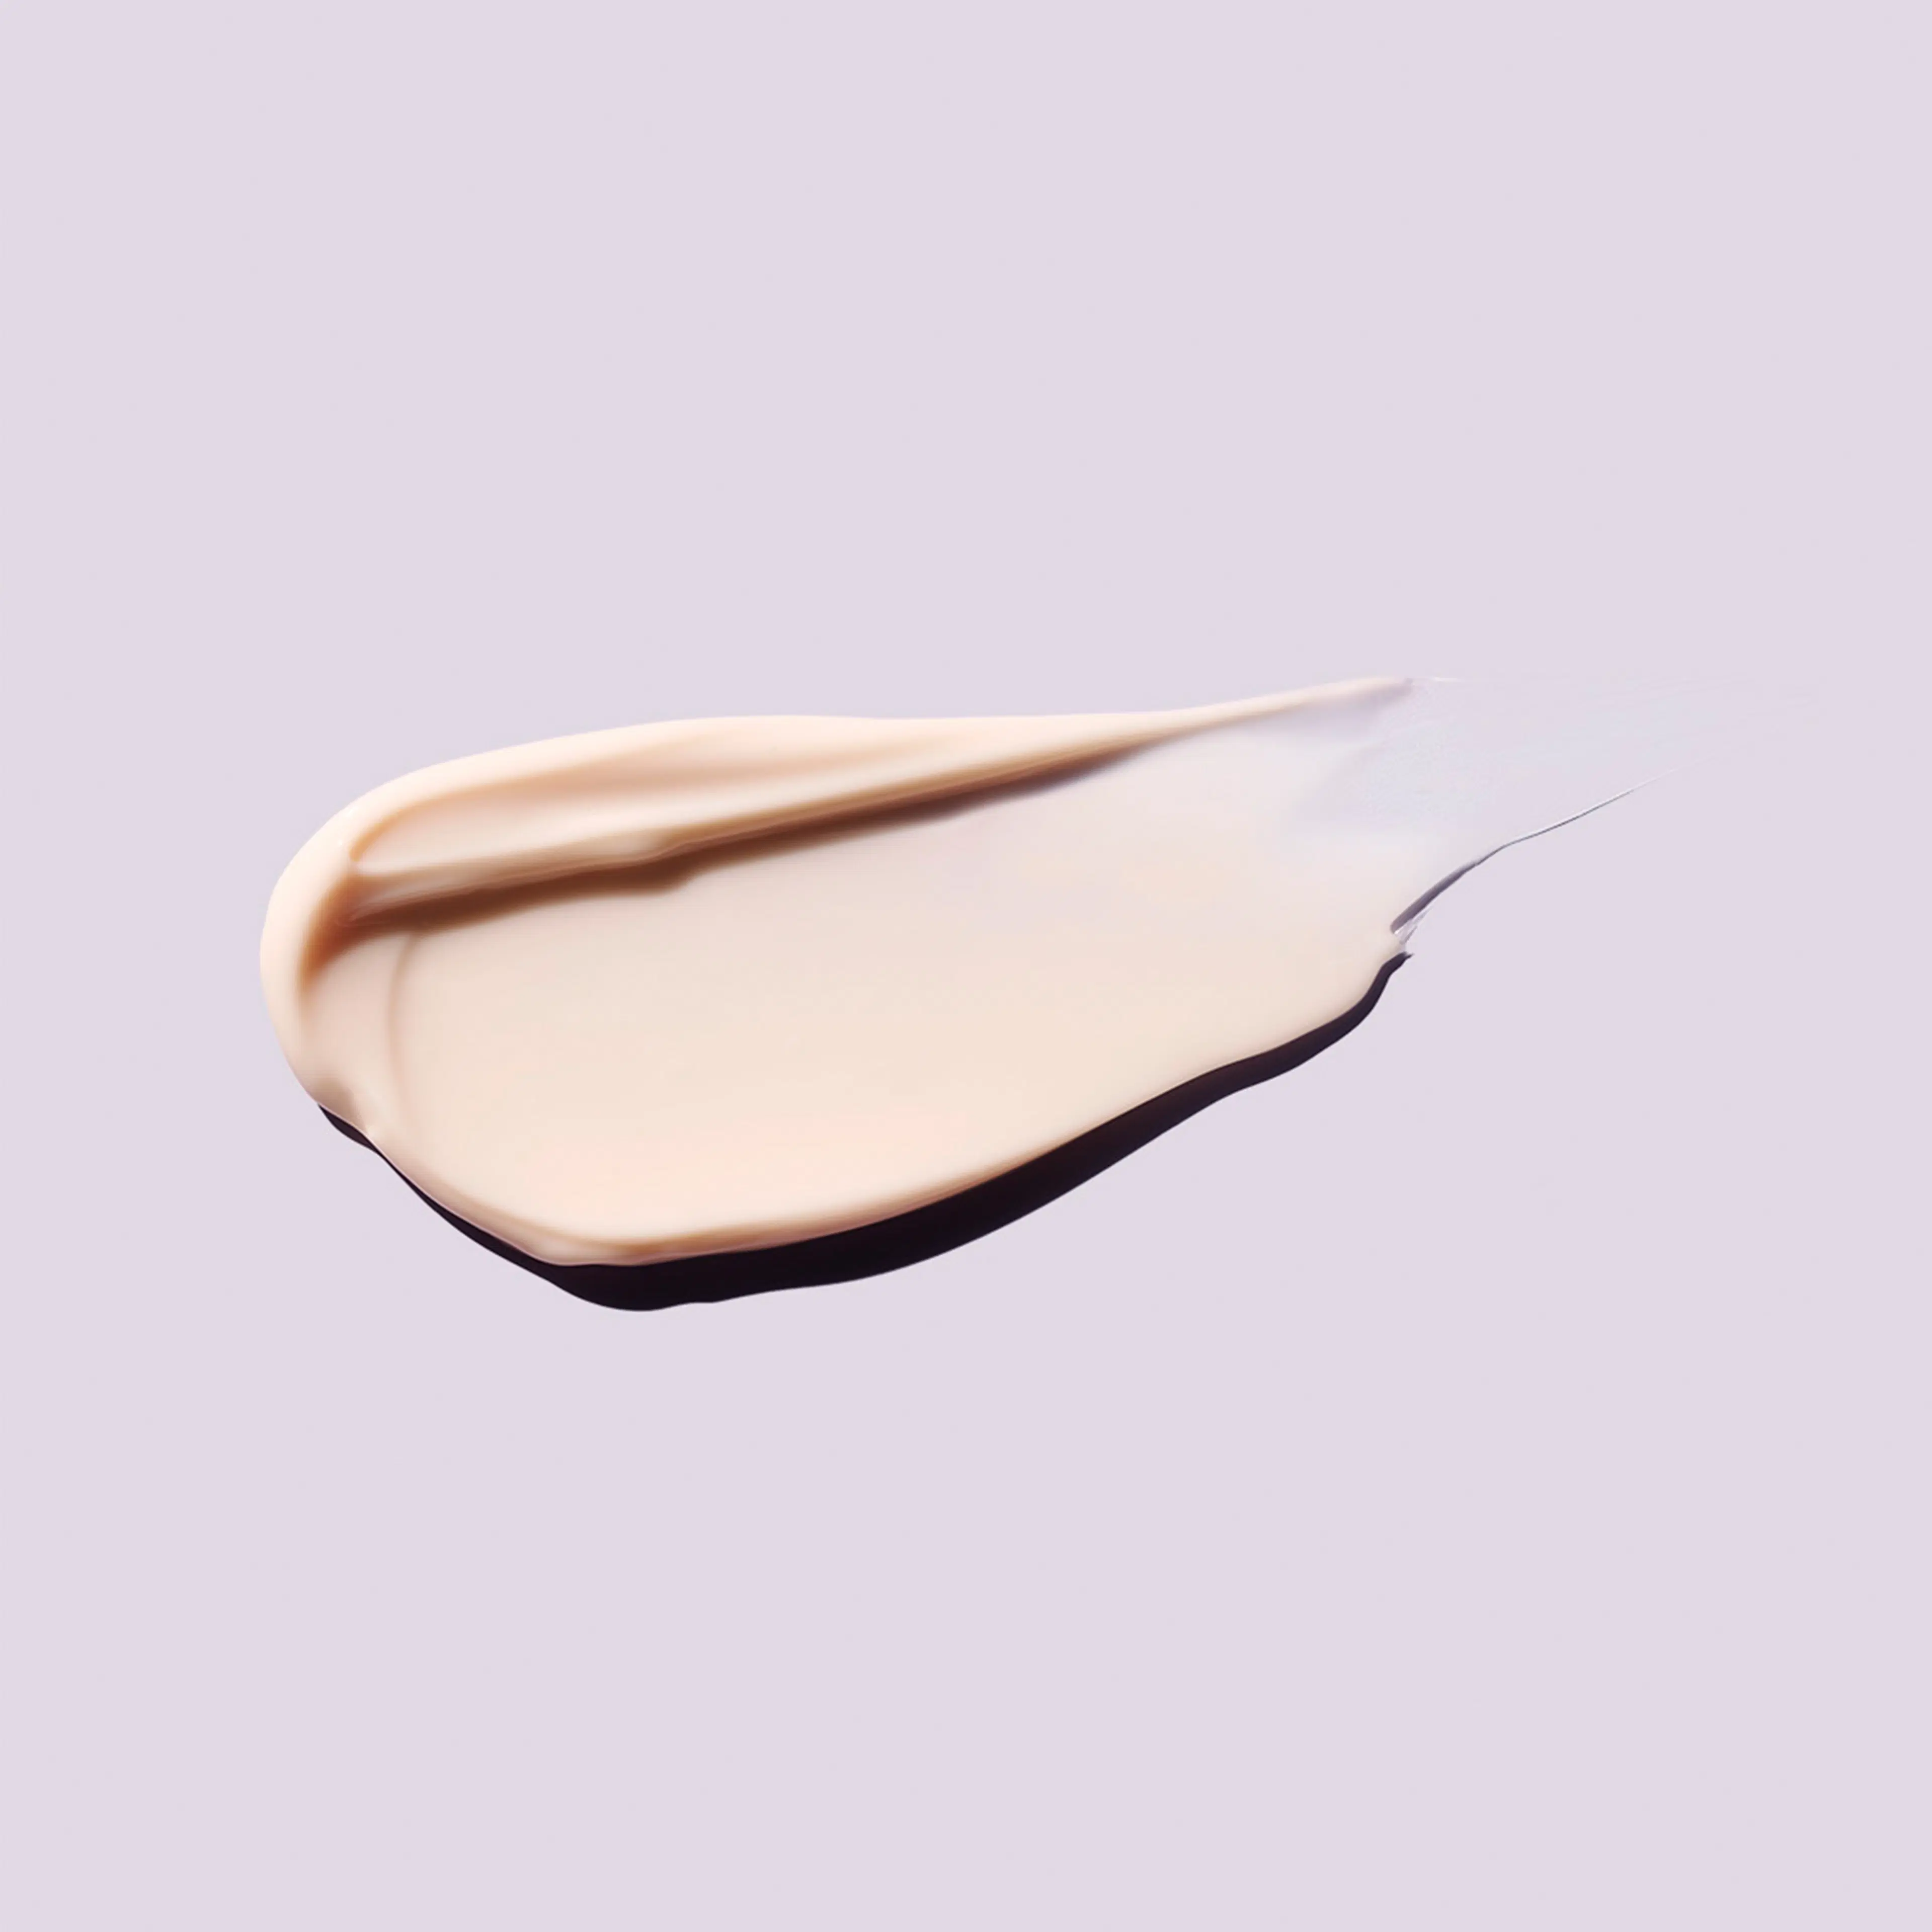 Fenty Skin Instant Reset Overnight Recovery Gel-Cream yövoide 50 ml